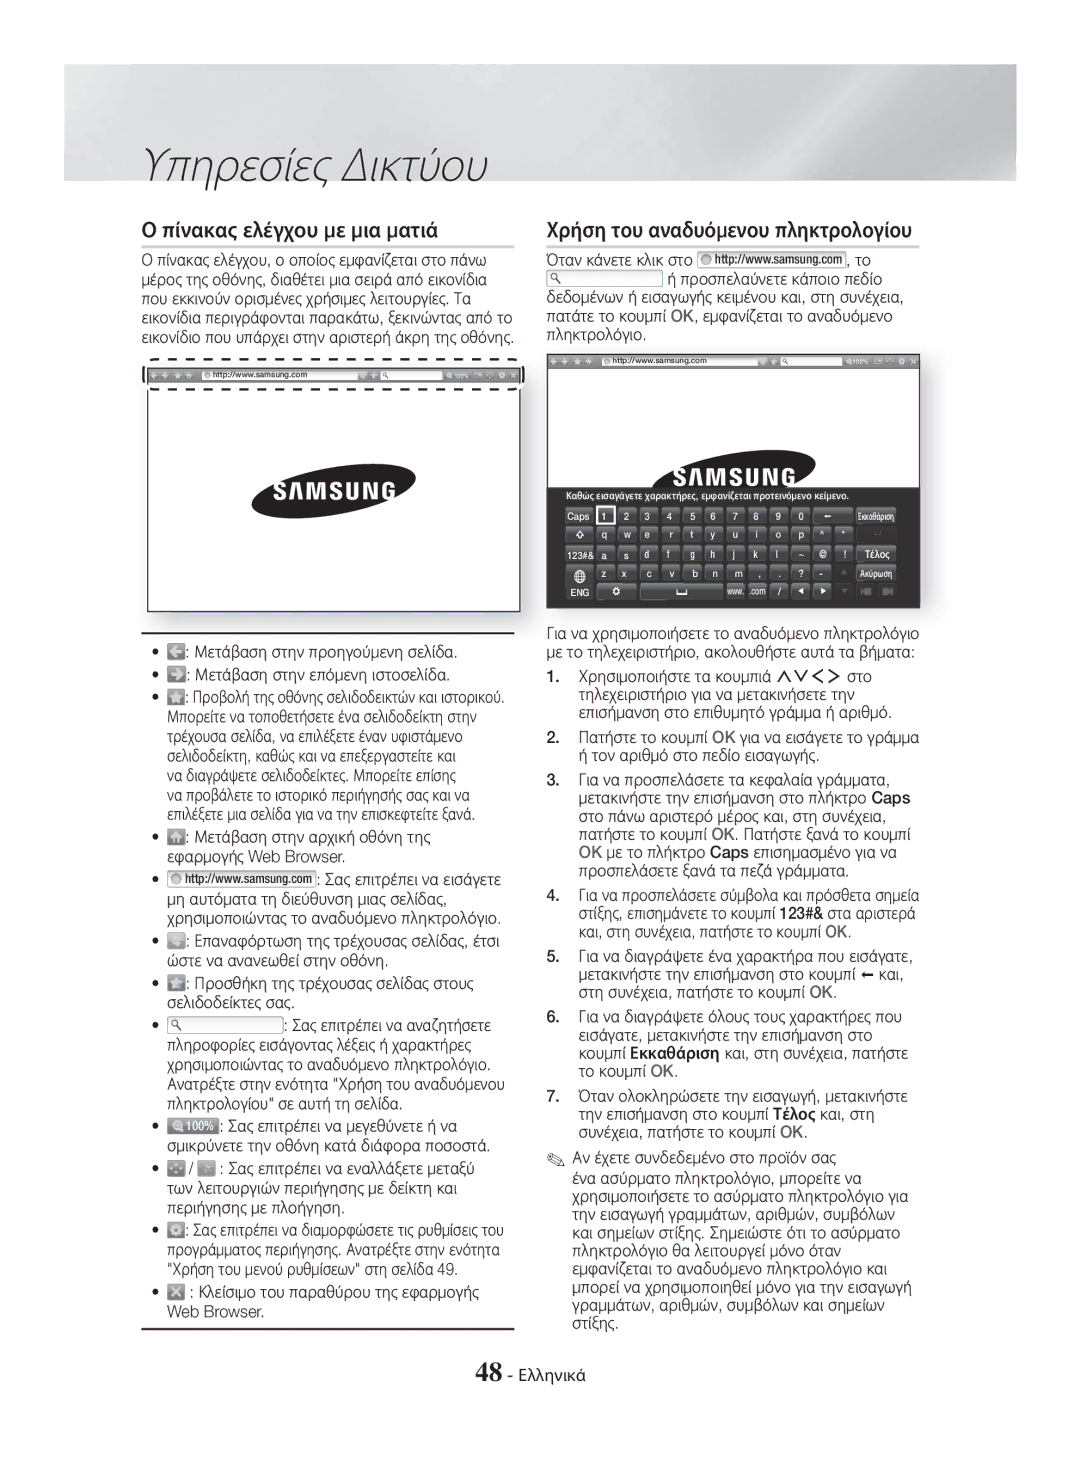 Samsung HT-H7750WM/TK manual Πίνακας ελέγχου με μια ματιά, Κλείσιμο του παραθύρου της εφαρμογής Web Browser, 48 Ελληνικά 